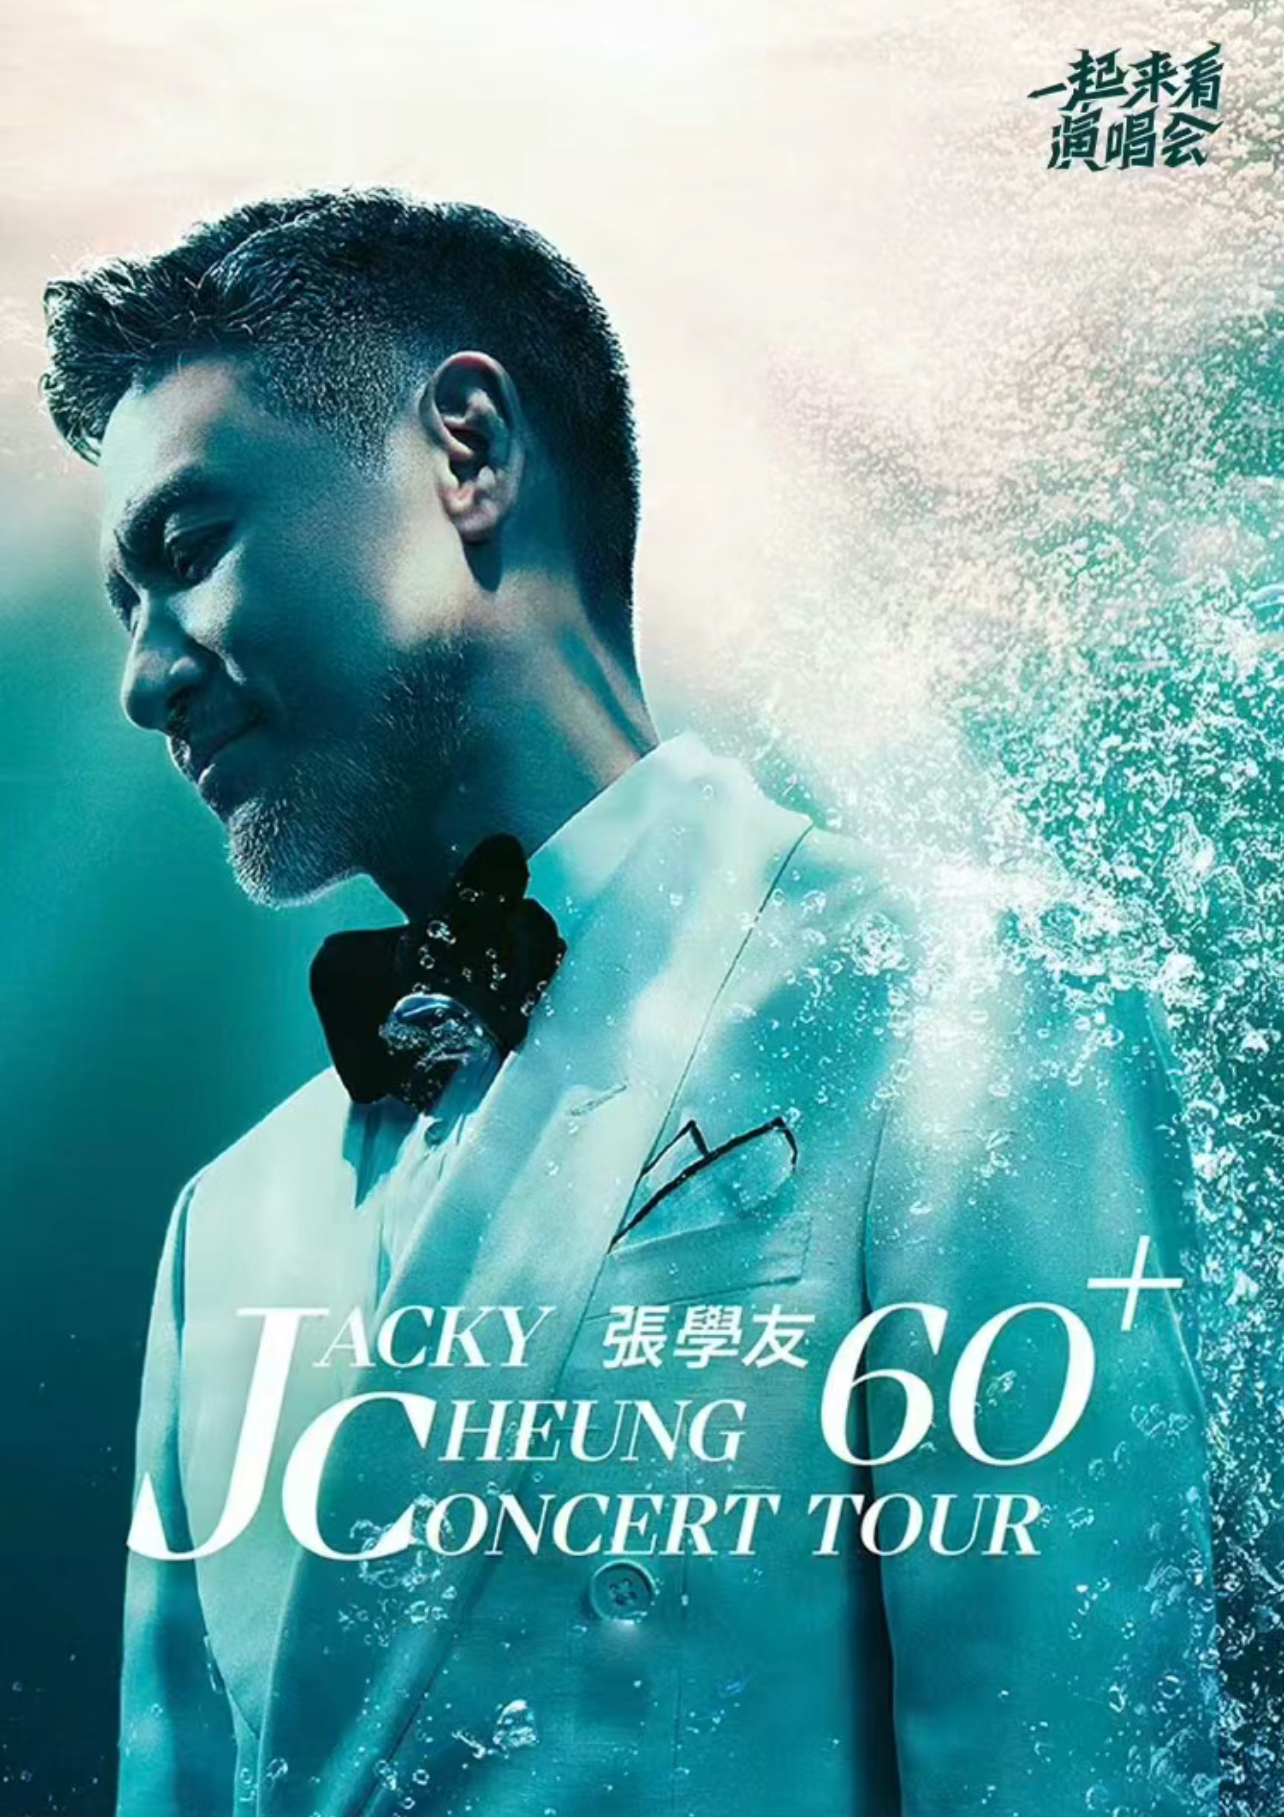 JACKY CHEUNG 60+ CONCERT TOUR 张学友60+巡回演唱会-北京站